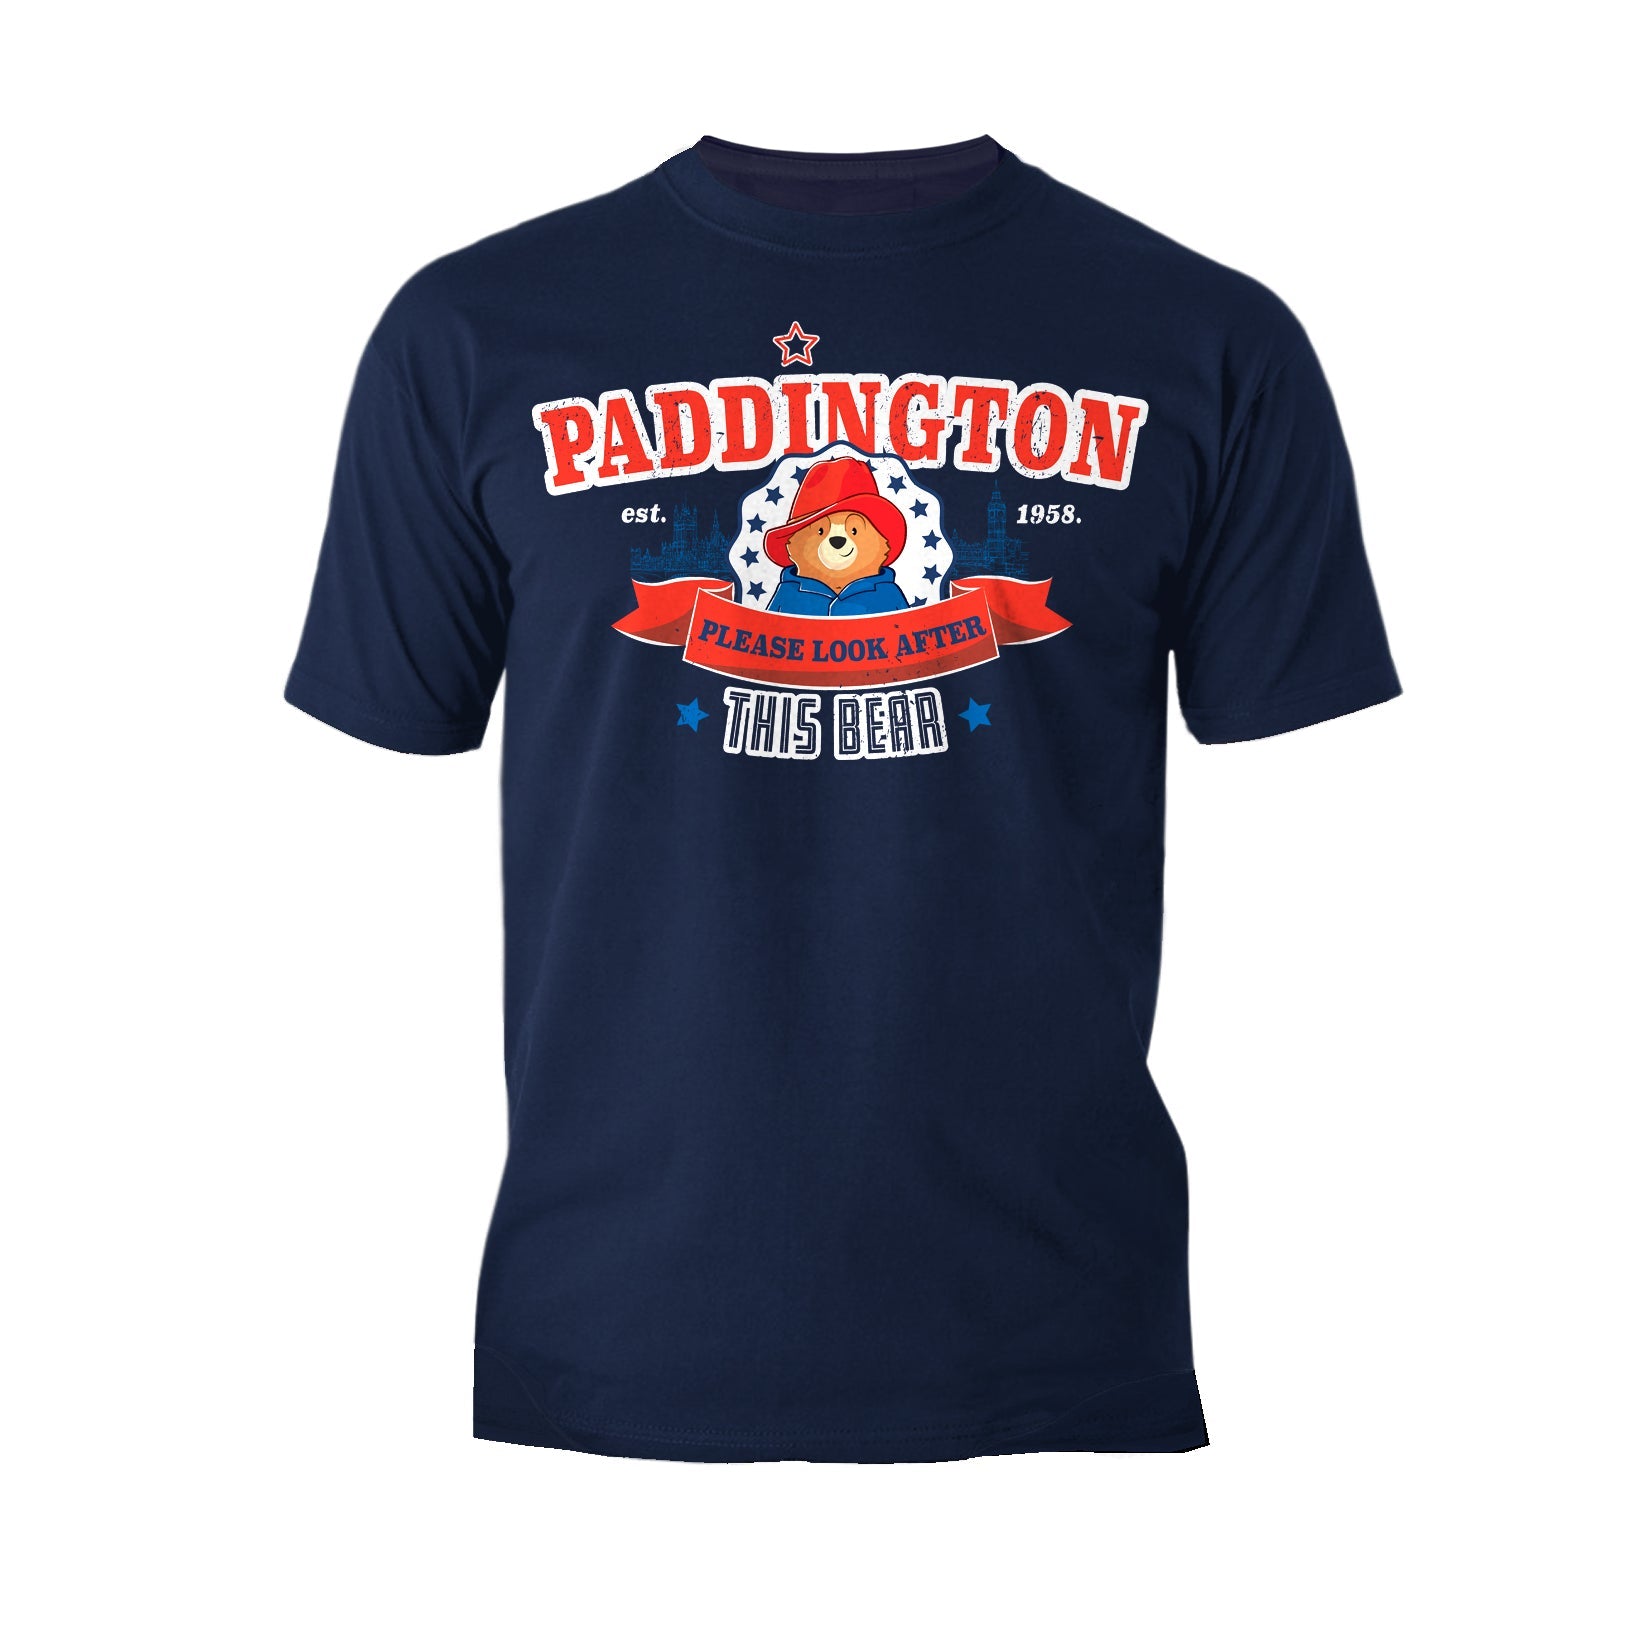 Paddington Bear Collegiate London Please Look Saturated Official Men's T-Shirt